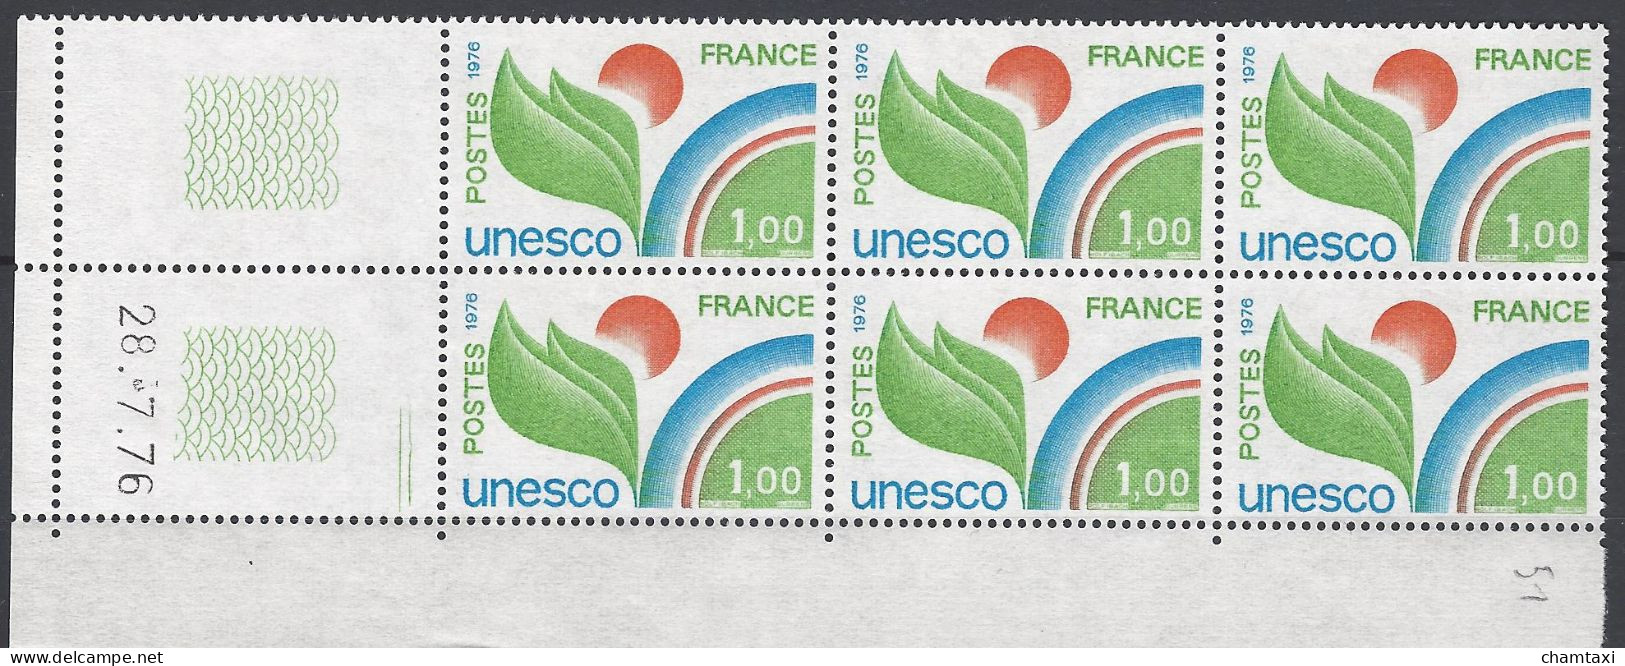 CD 51 FRANCE 1976 TIMBRE SERVICE UNESCO COIN DATE 51 : 28 / 7 / 76 - Officials